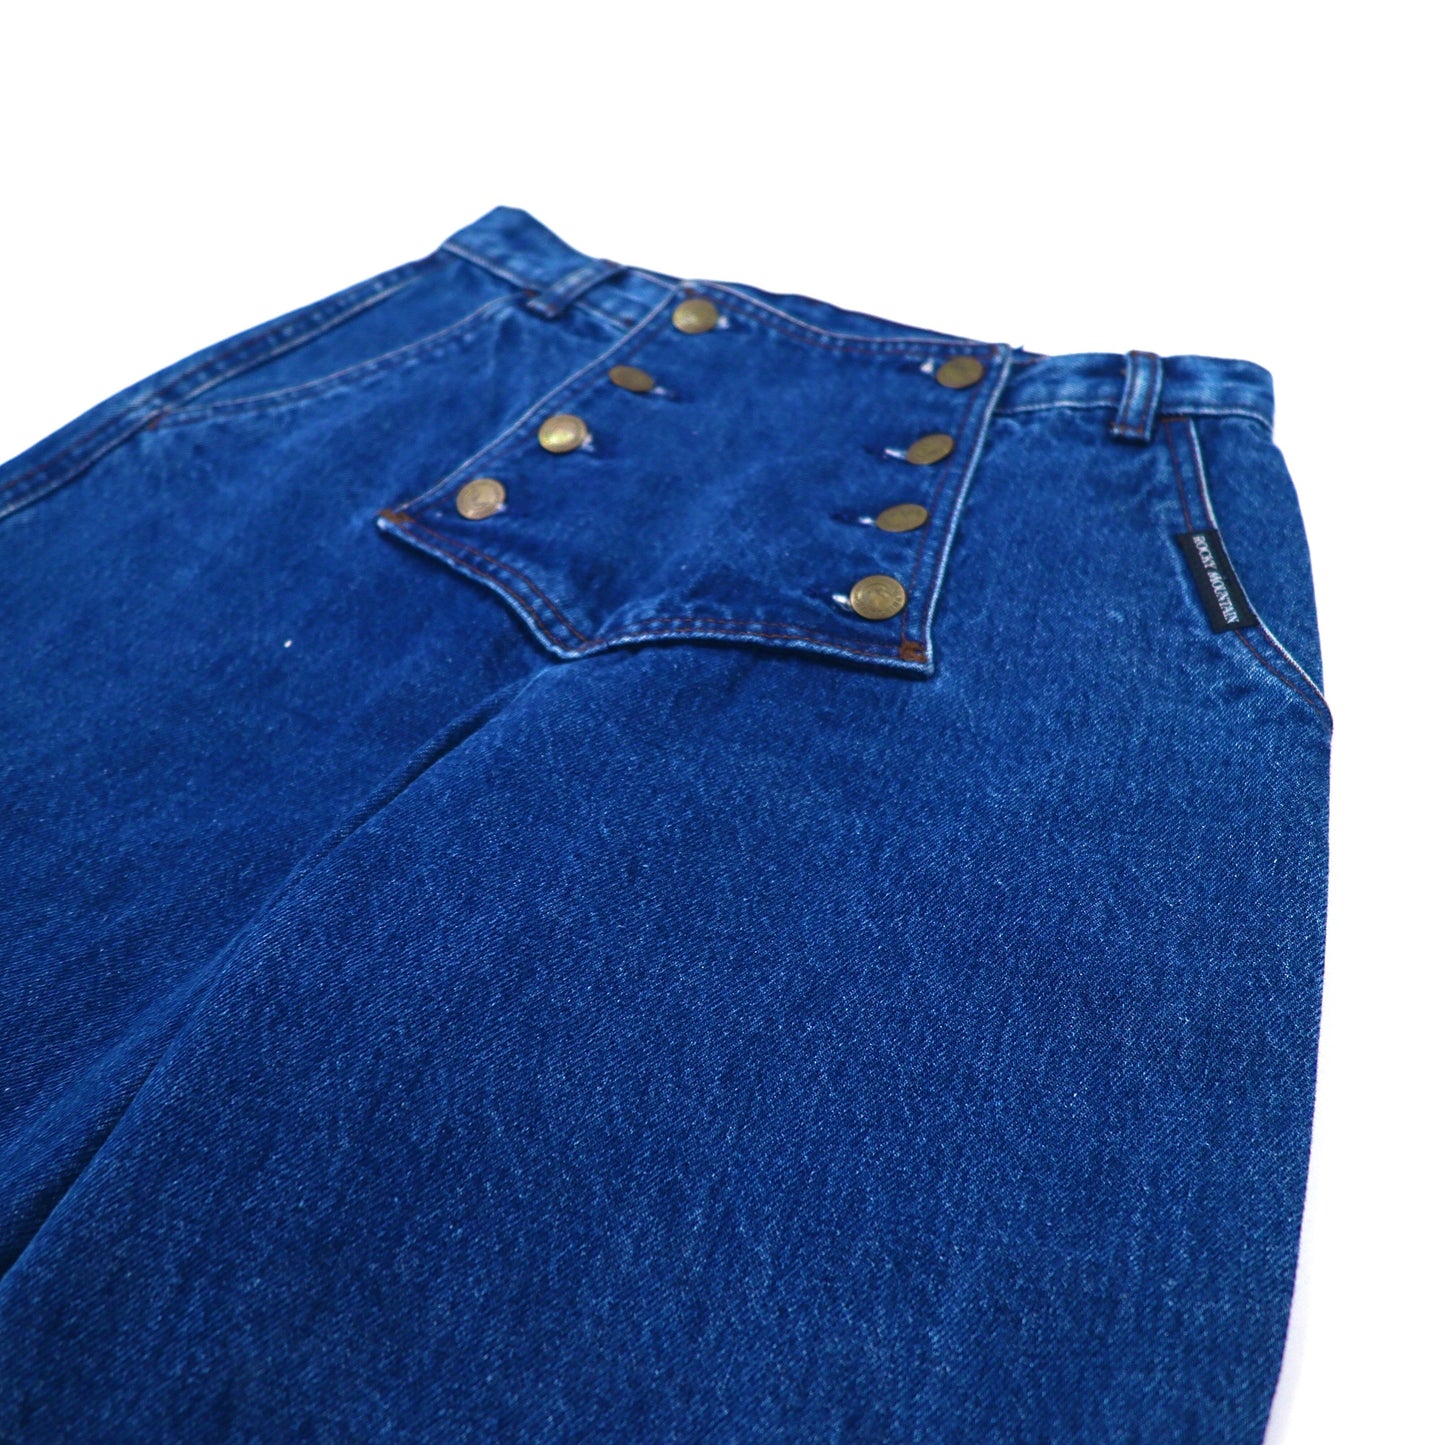 ROCKY MOUNTAIN CLOTHING マリンデニムパンツ 29 ブルー 70年代 USA製